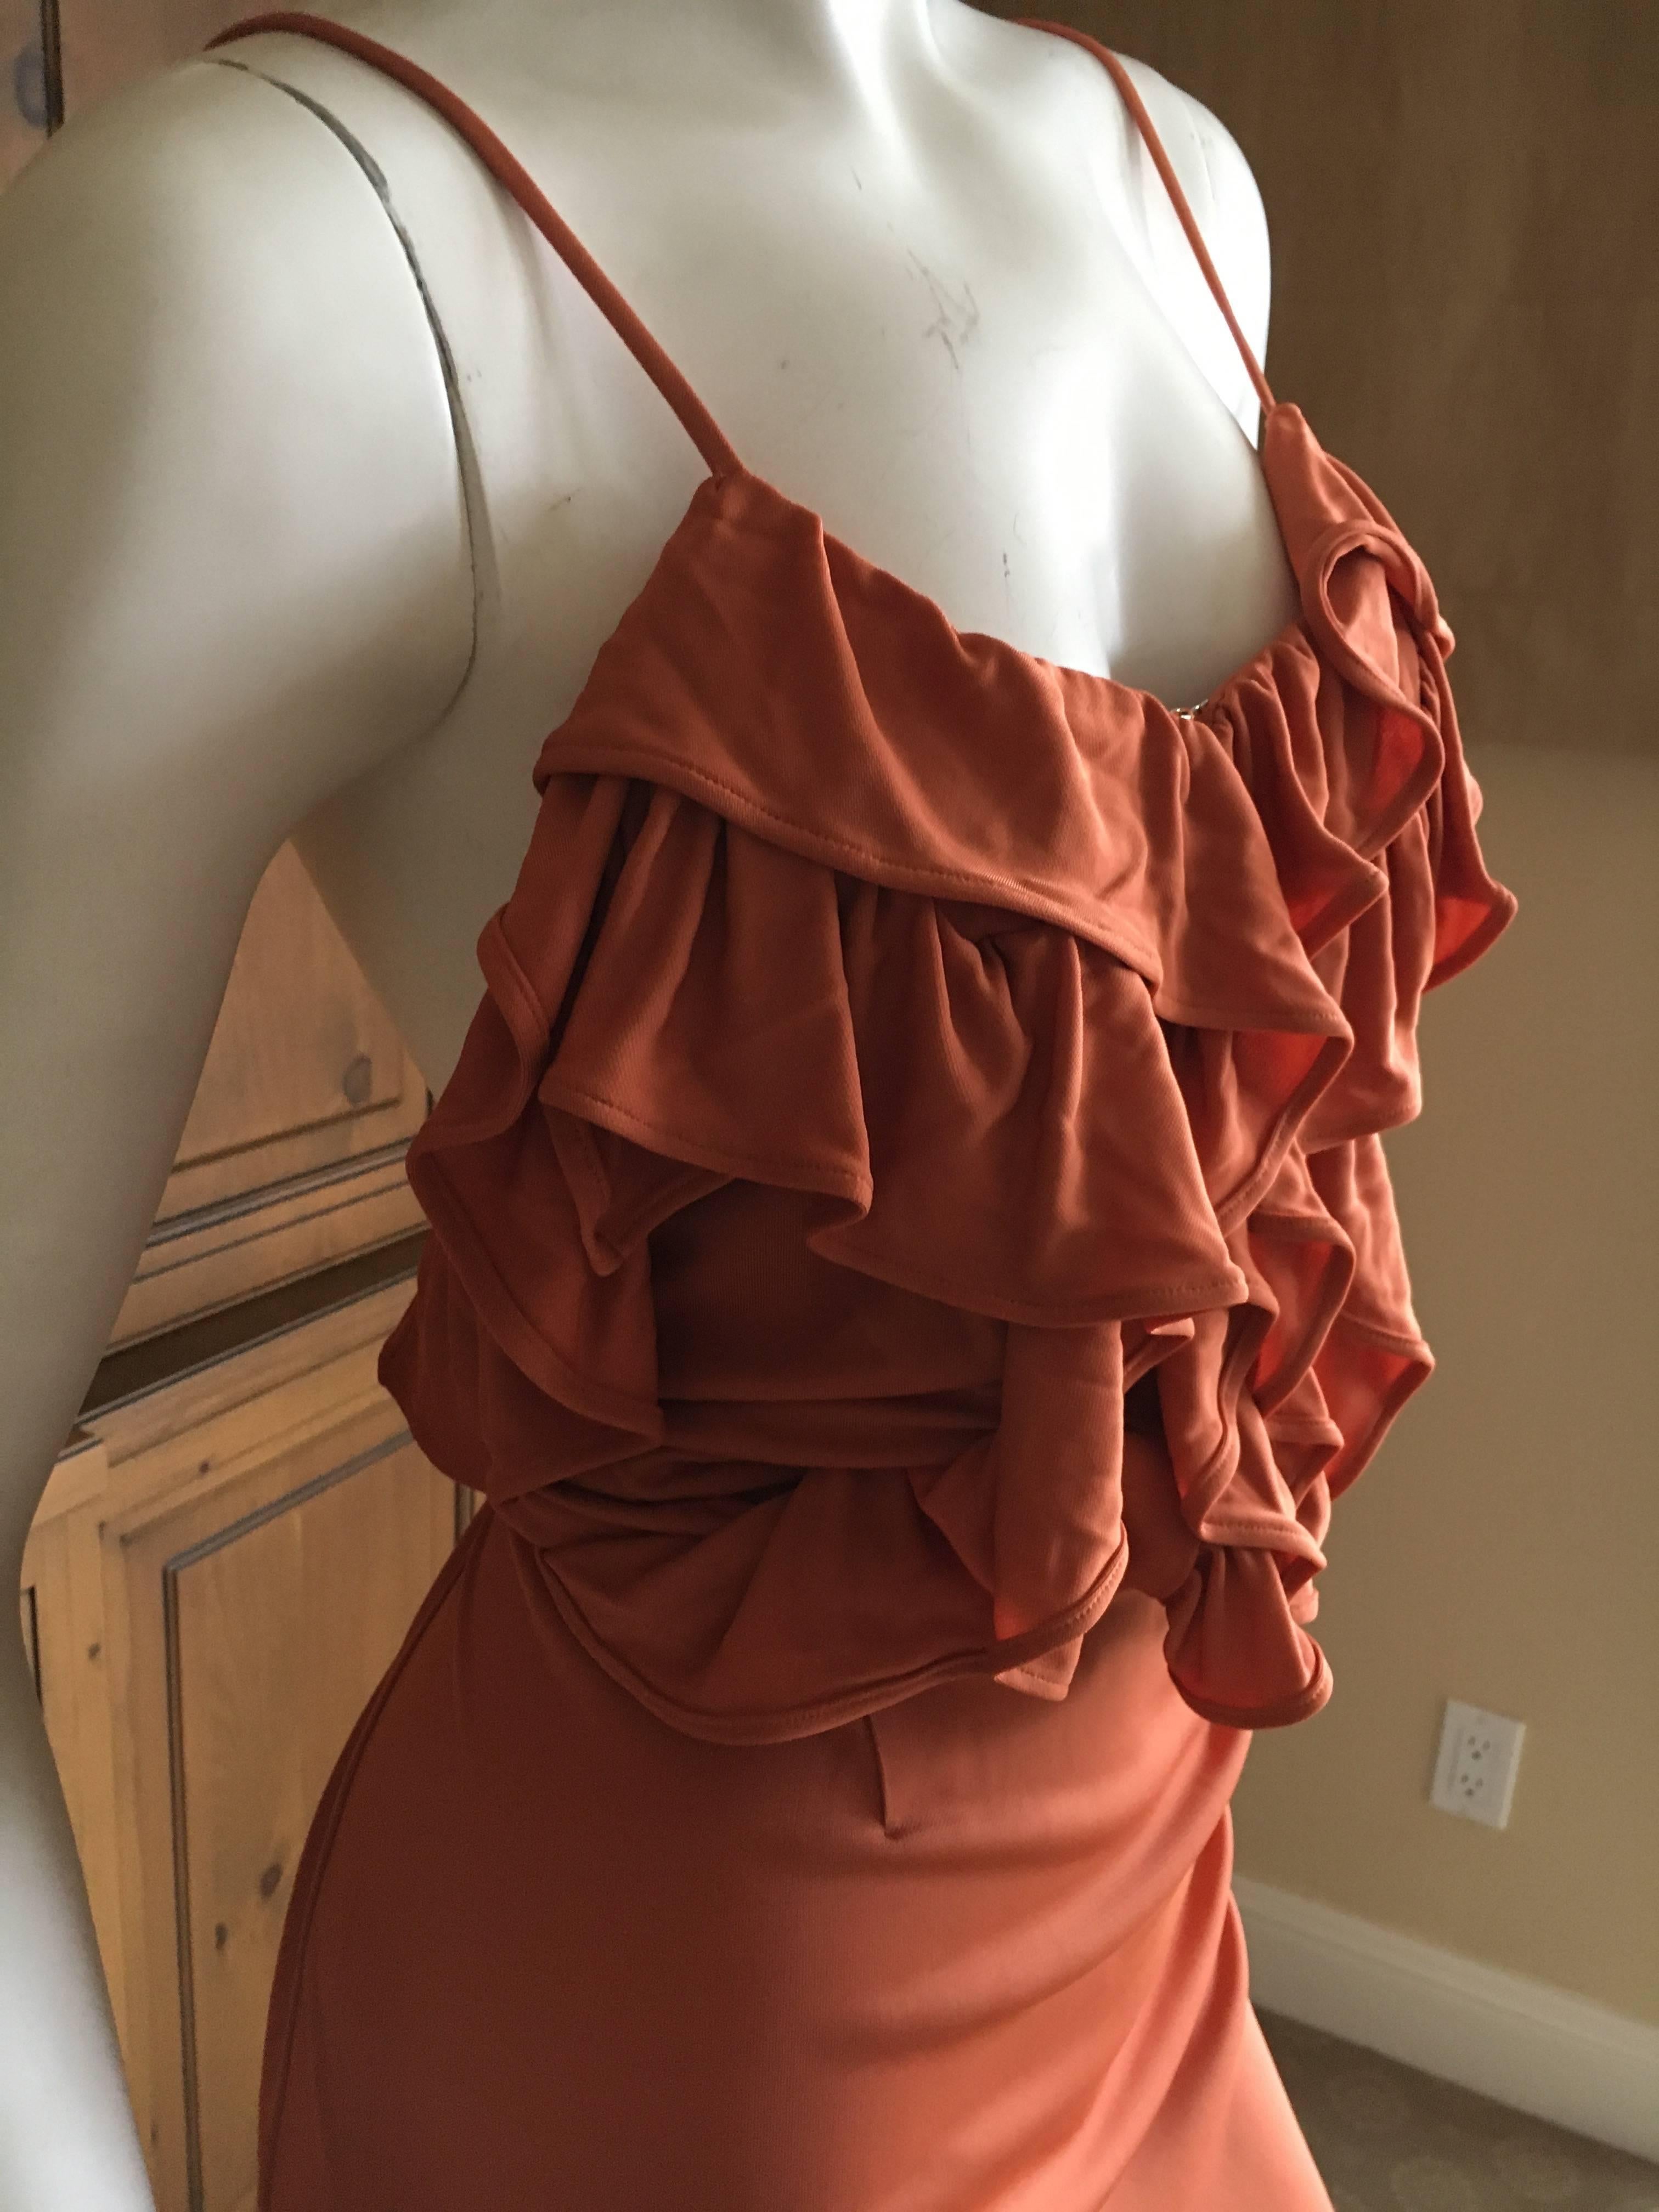 Festive orange ruffle dress from John Galliano.
Size 42
Bust 38'
Waist 30